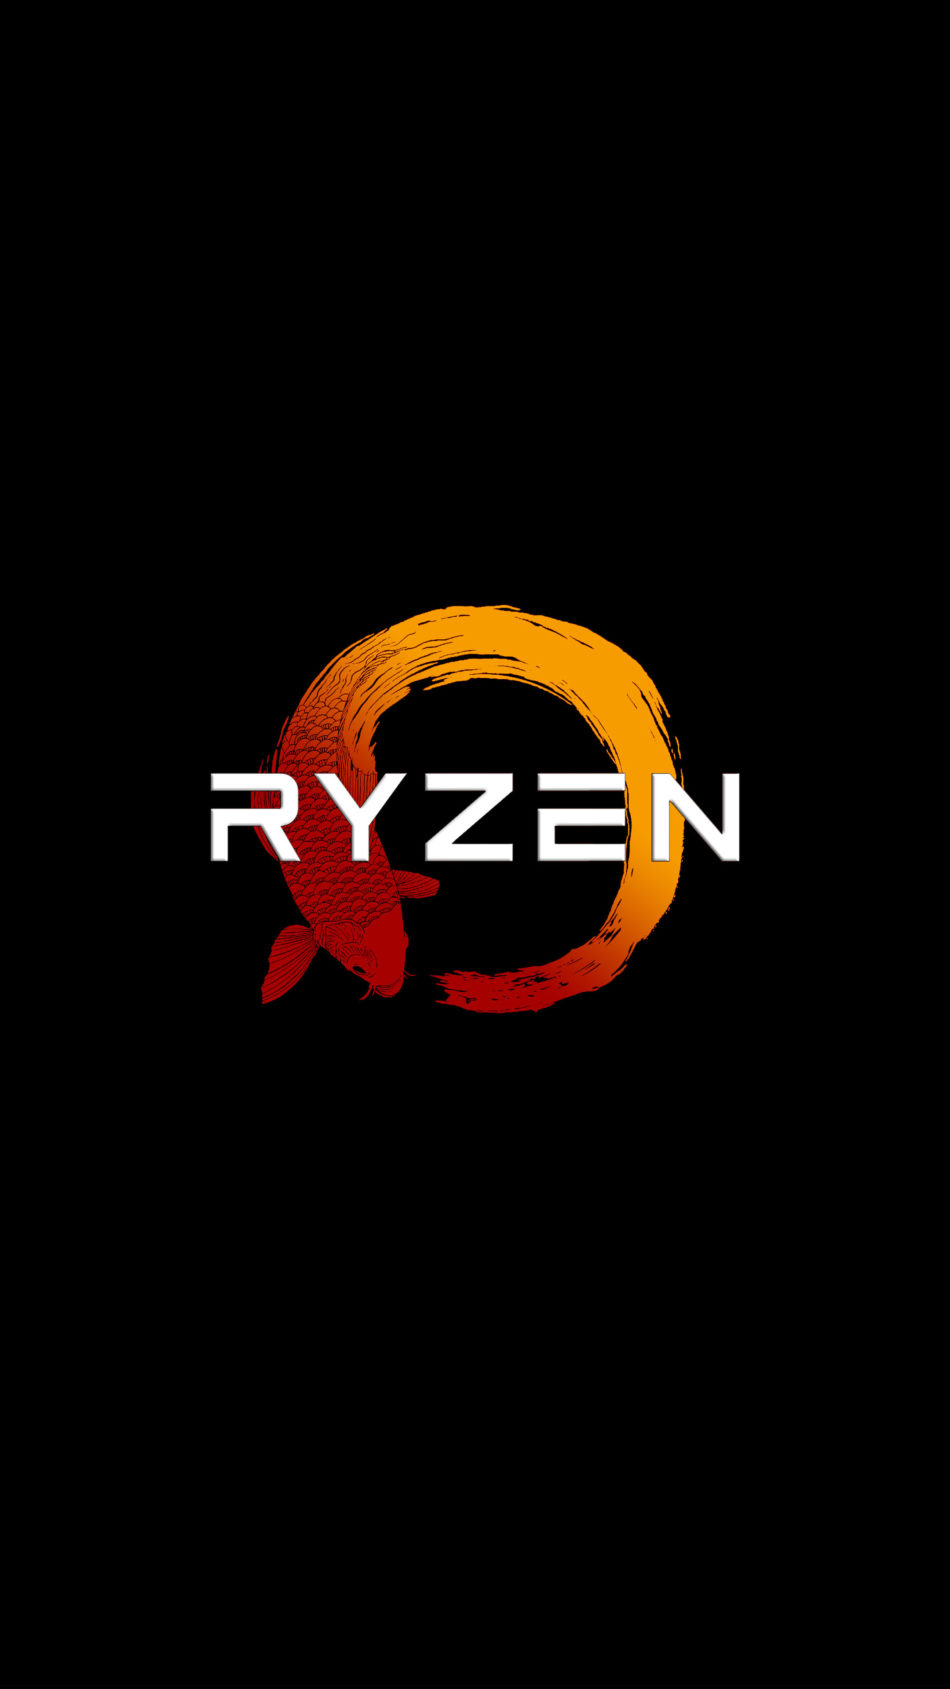 Ryzen Logo 2020 4K Ultra HD Mobile Wallpaper